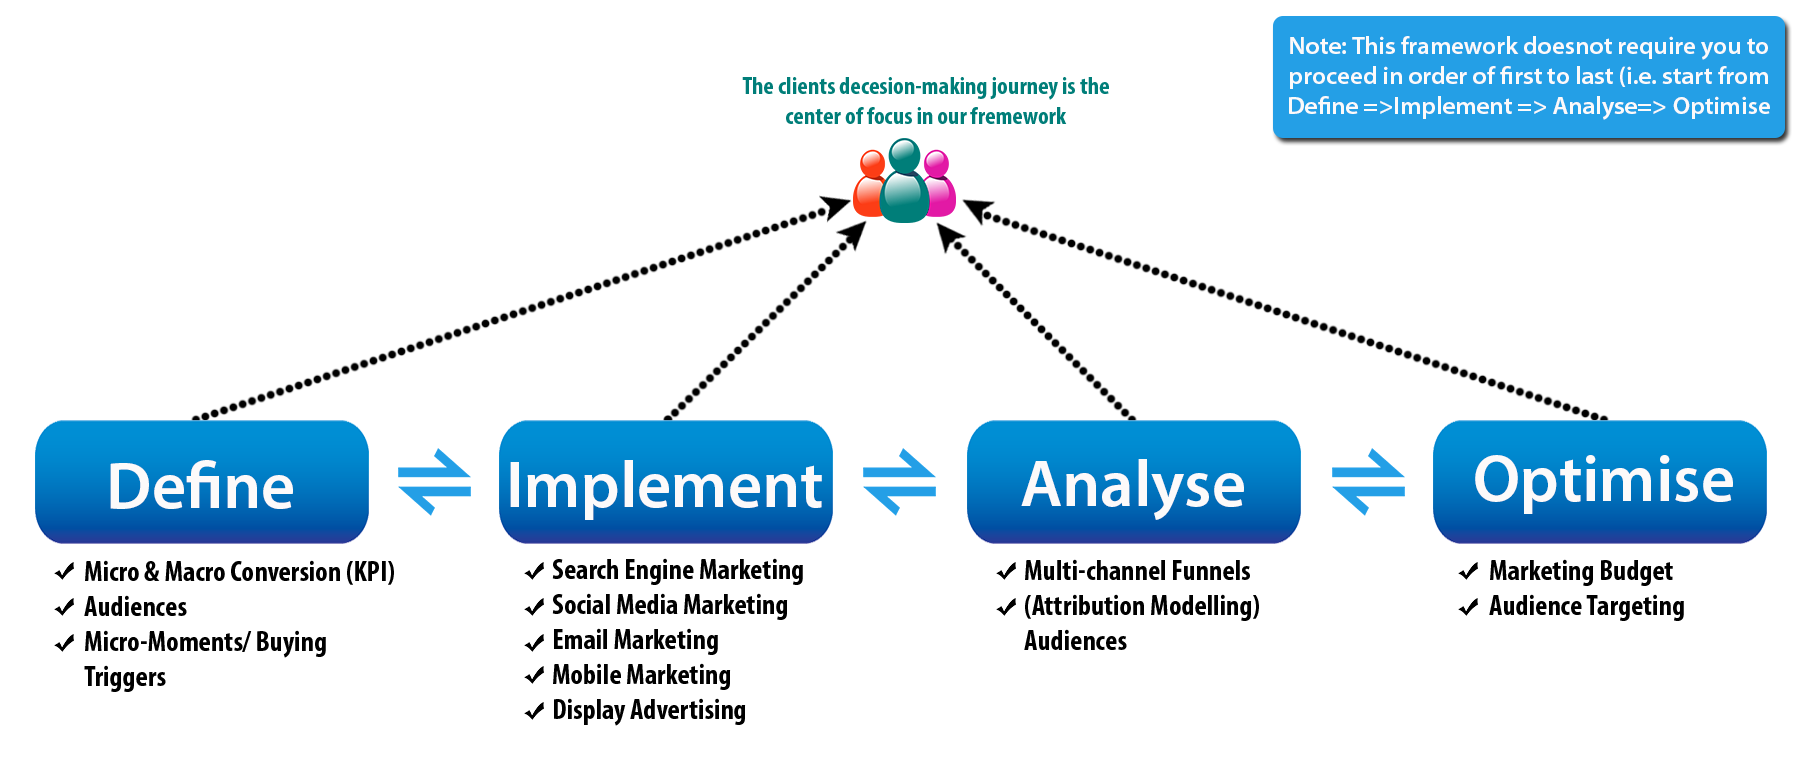 Application Development framework at SmartKats Software